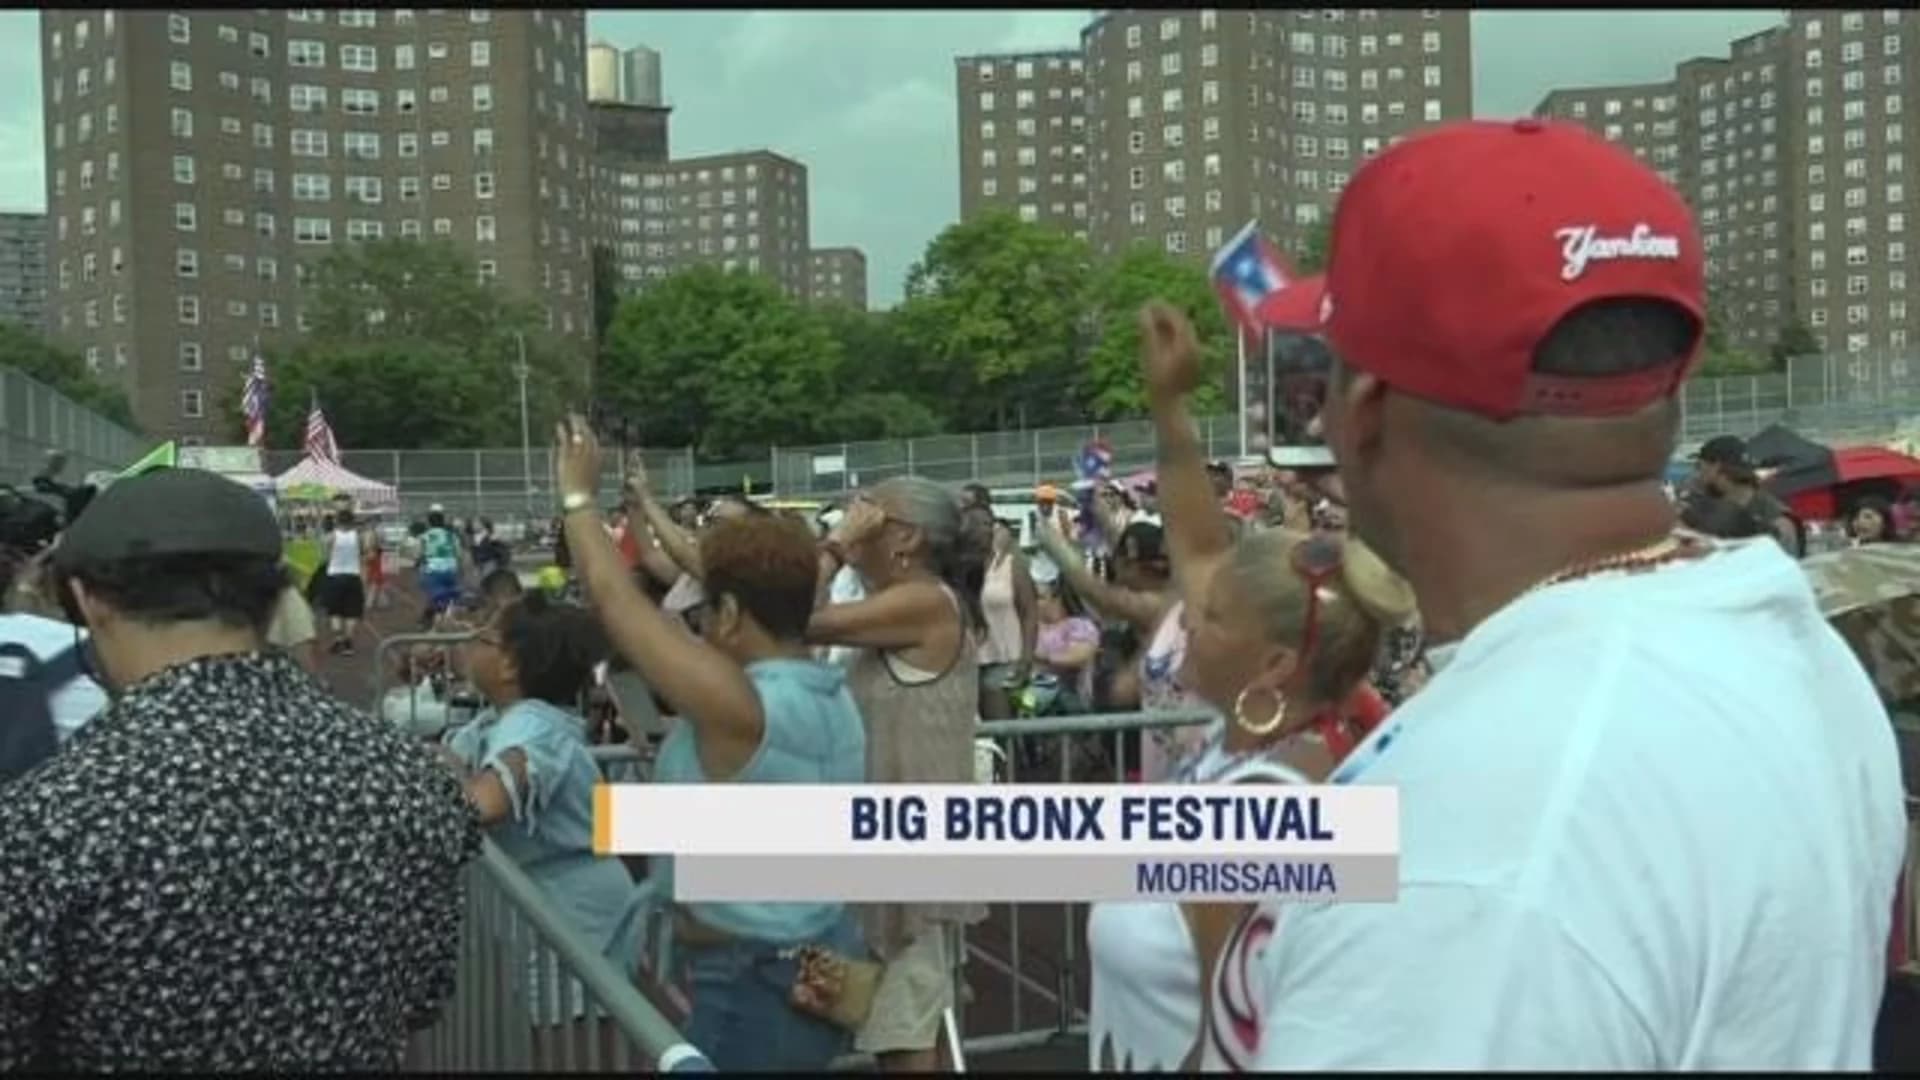 Morrisania plays host to the Big Bronx Festival